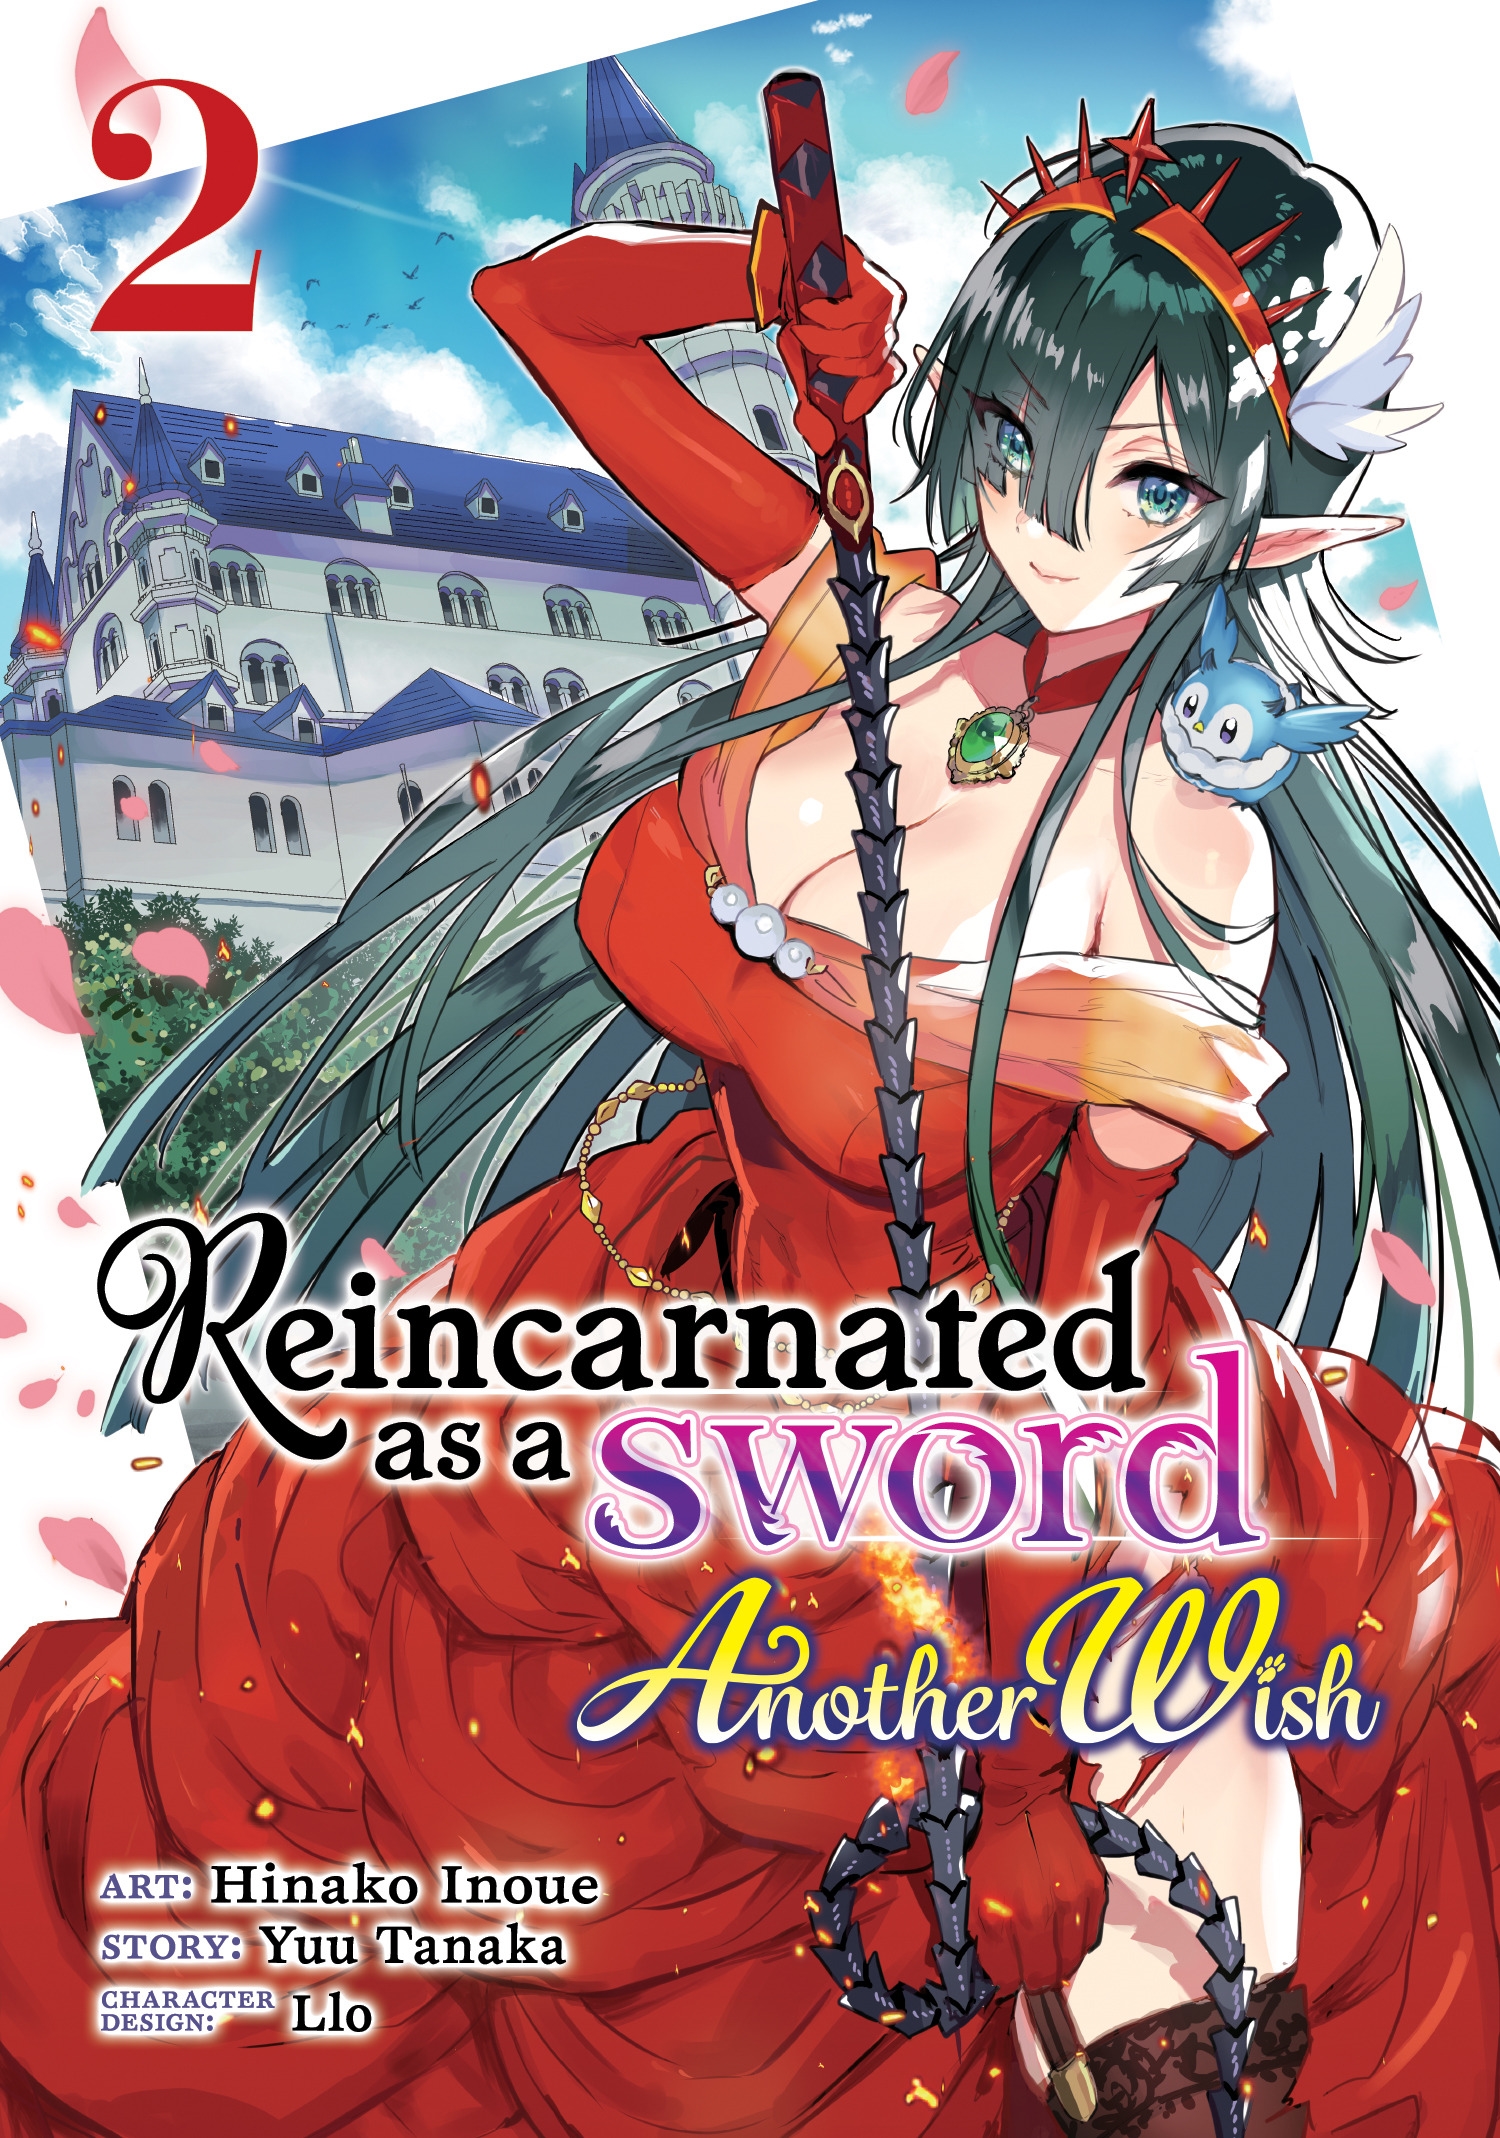 Reincarnated as a Sword Another Wish Manga Vol 2 by Yuu Tanaka  Penguin  Books Australia